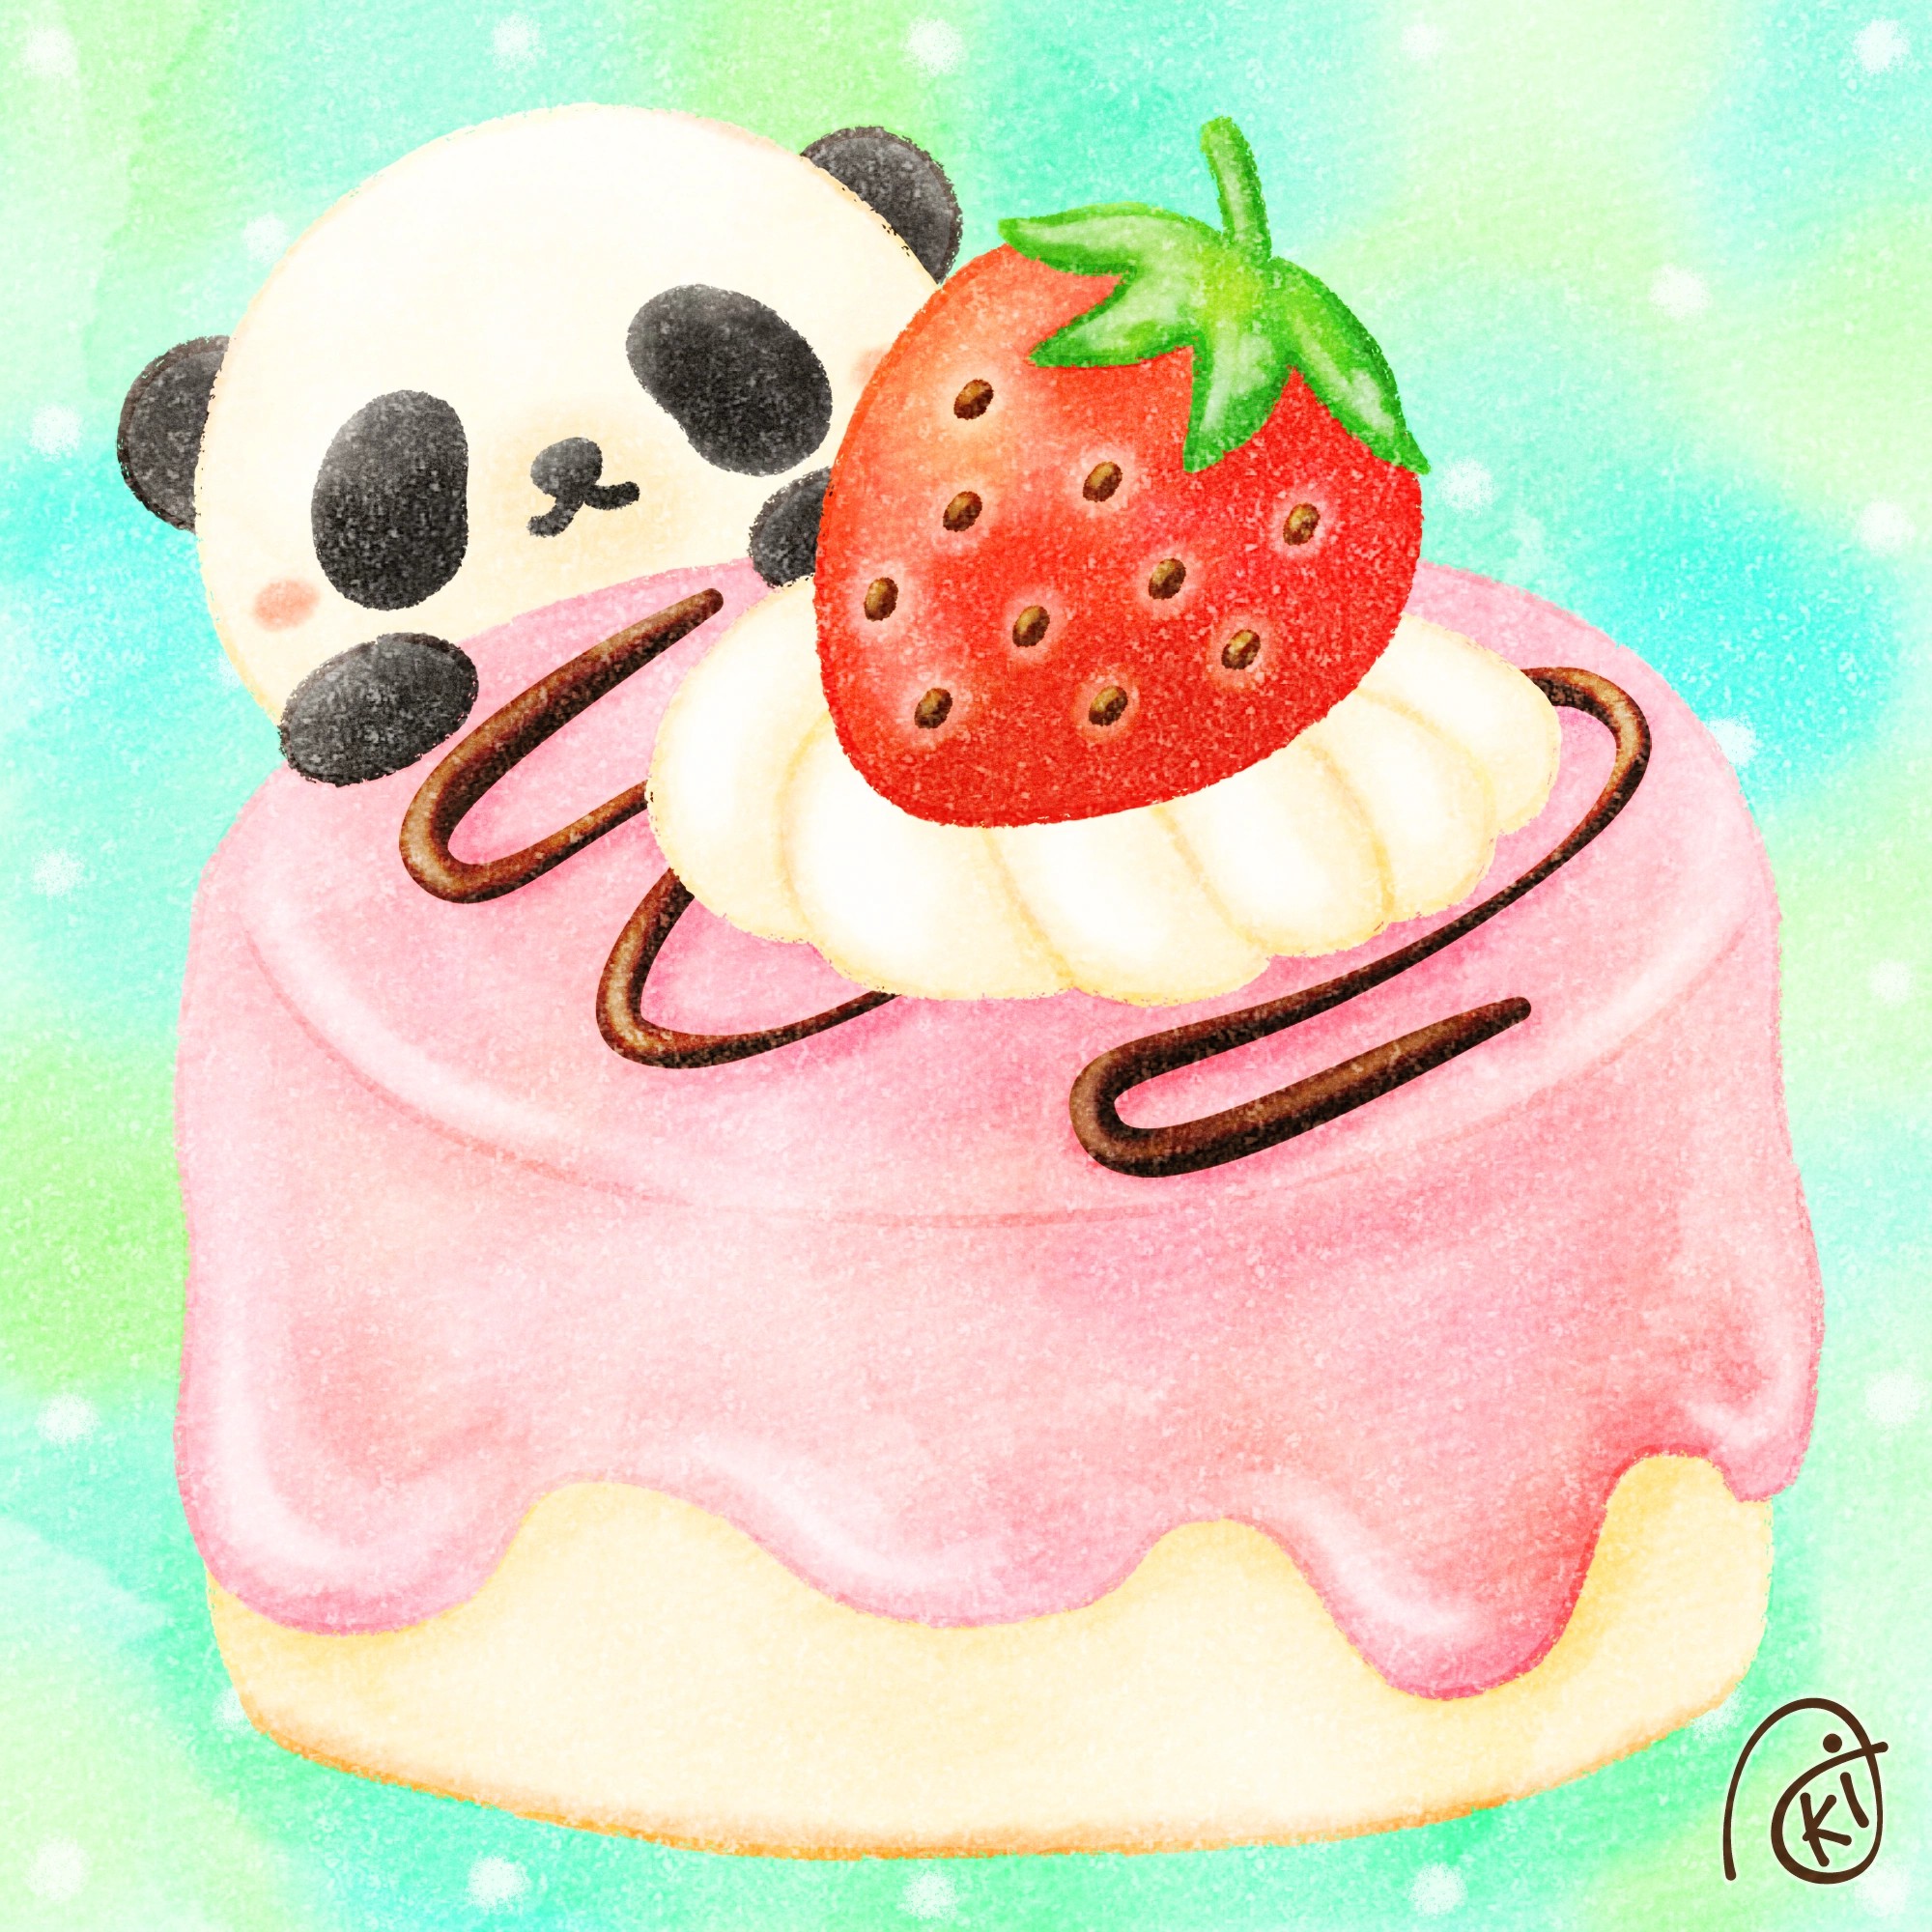 تويتر Aki على تويتر いちごクリームパンケーキ イラスト お絵描き パンダ いちごクリーム パンケーキ T Co Ncuf3mbvnq